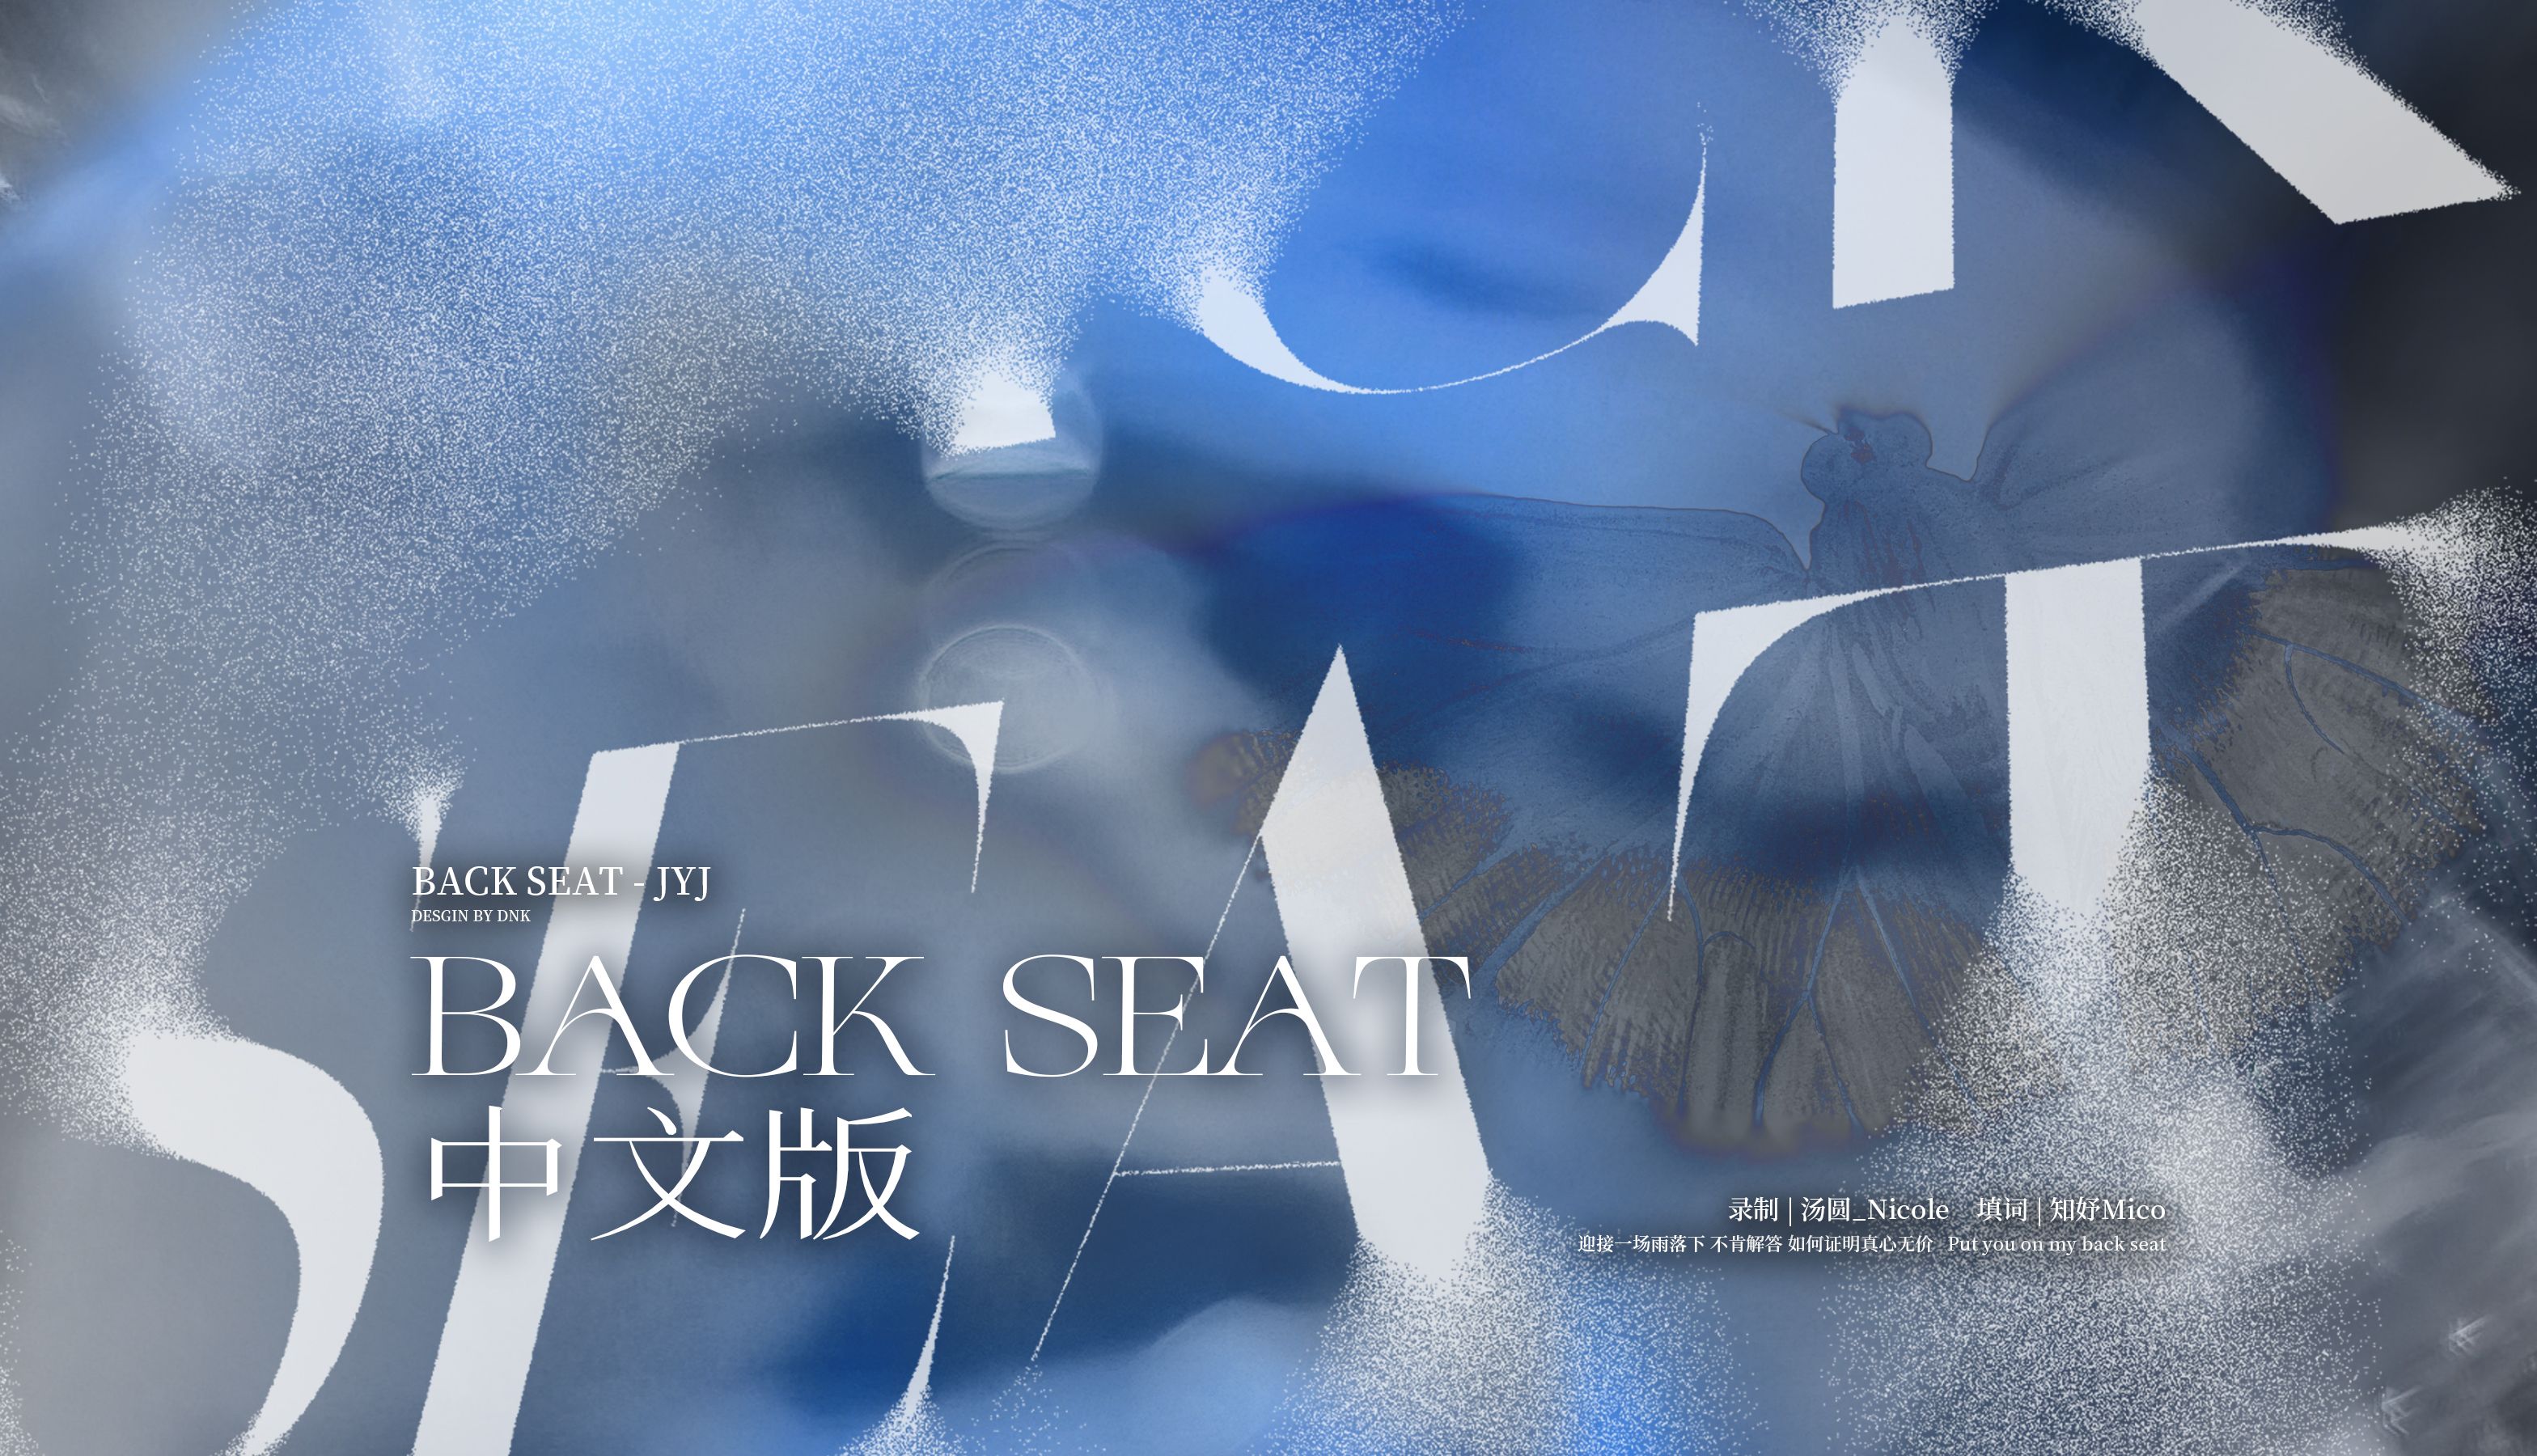 BACK SEAT唯美概念中文填词翻唱“一盏灯无法照亮我心中思念 ，一场梦已千年”